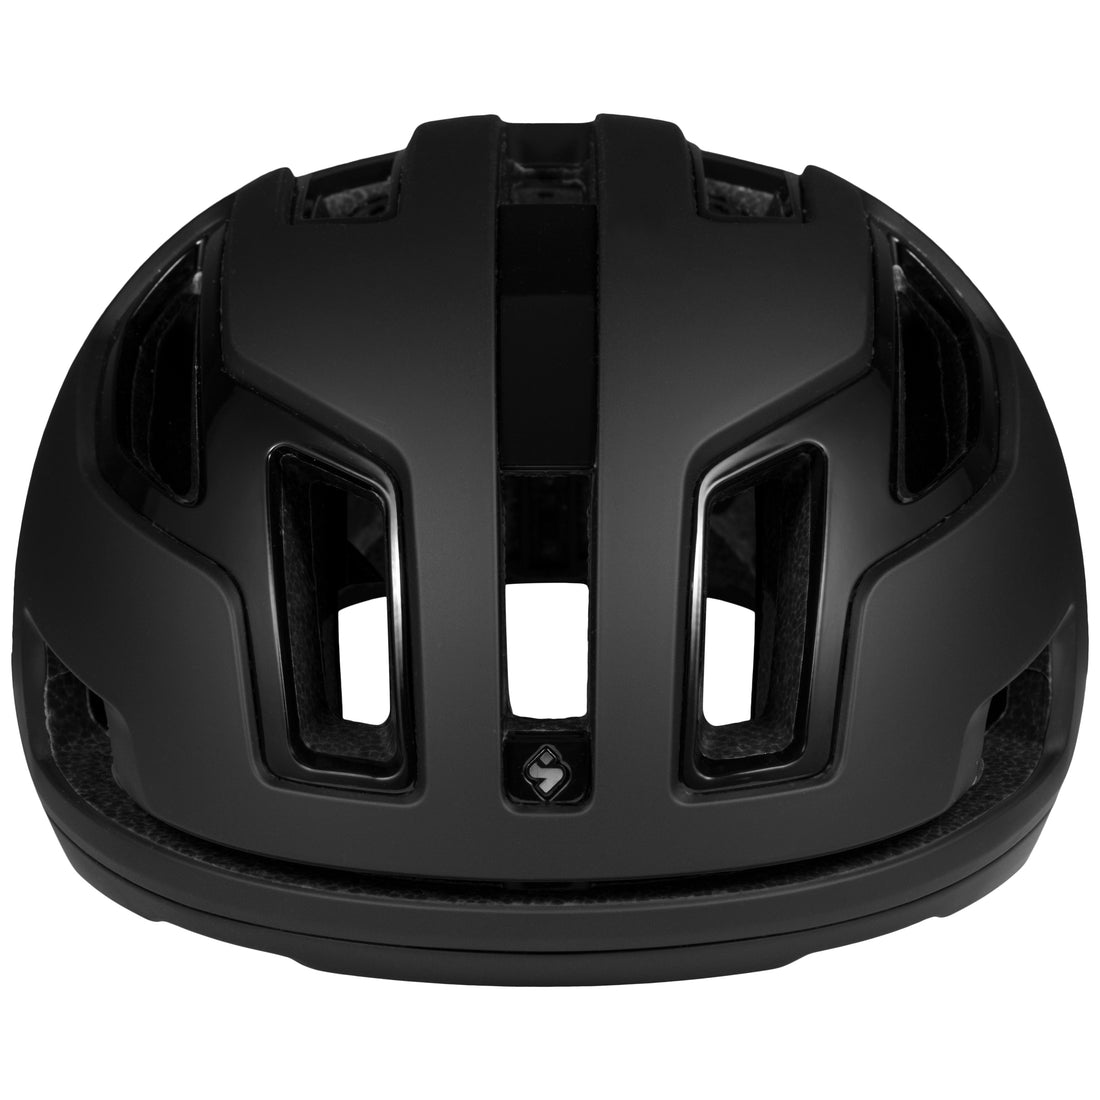 Sweet Protection Falconer 2Vi® Mips Helmet Helmet Black